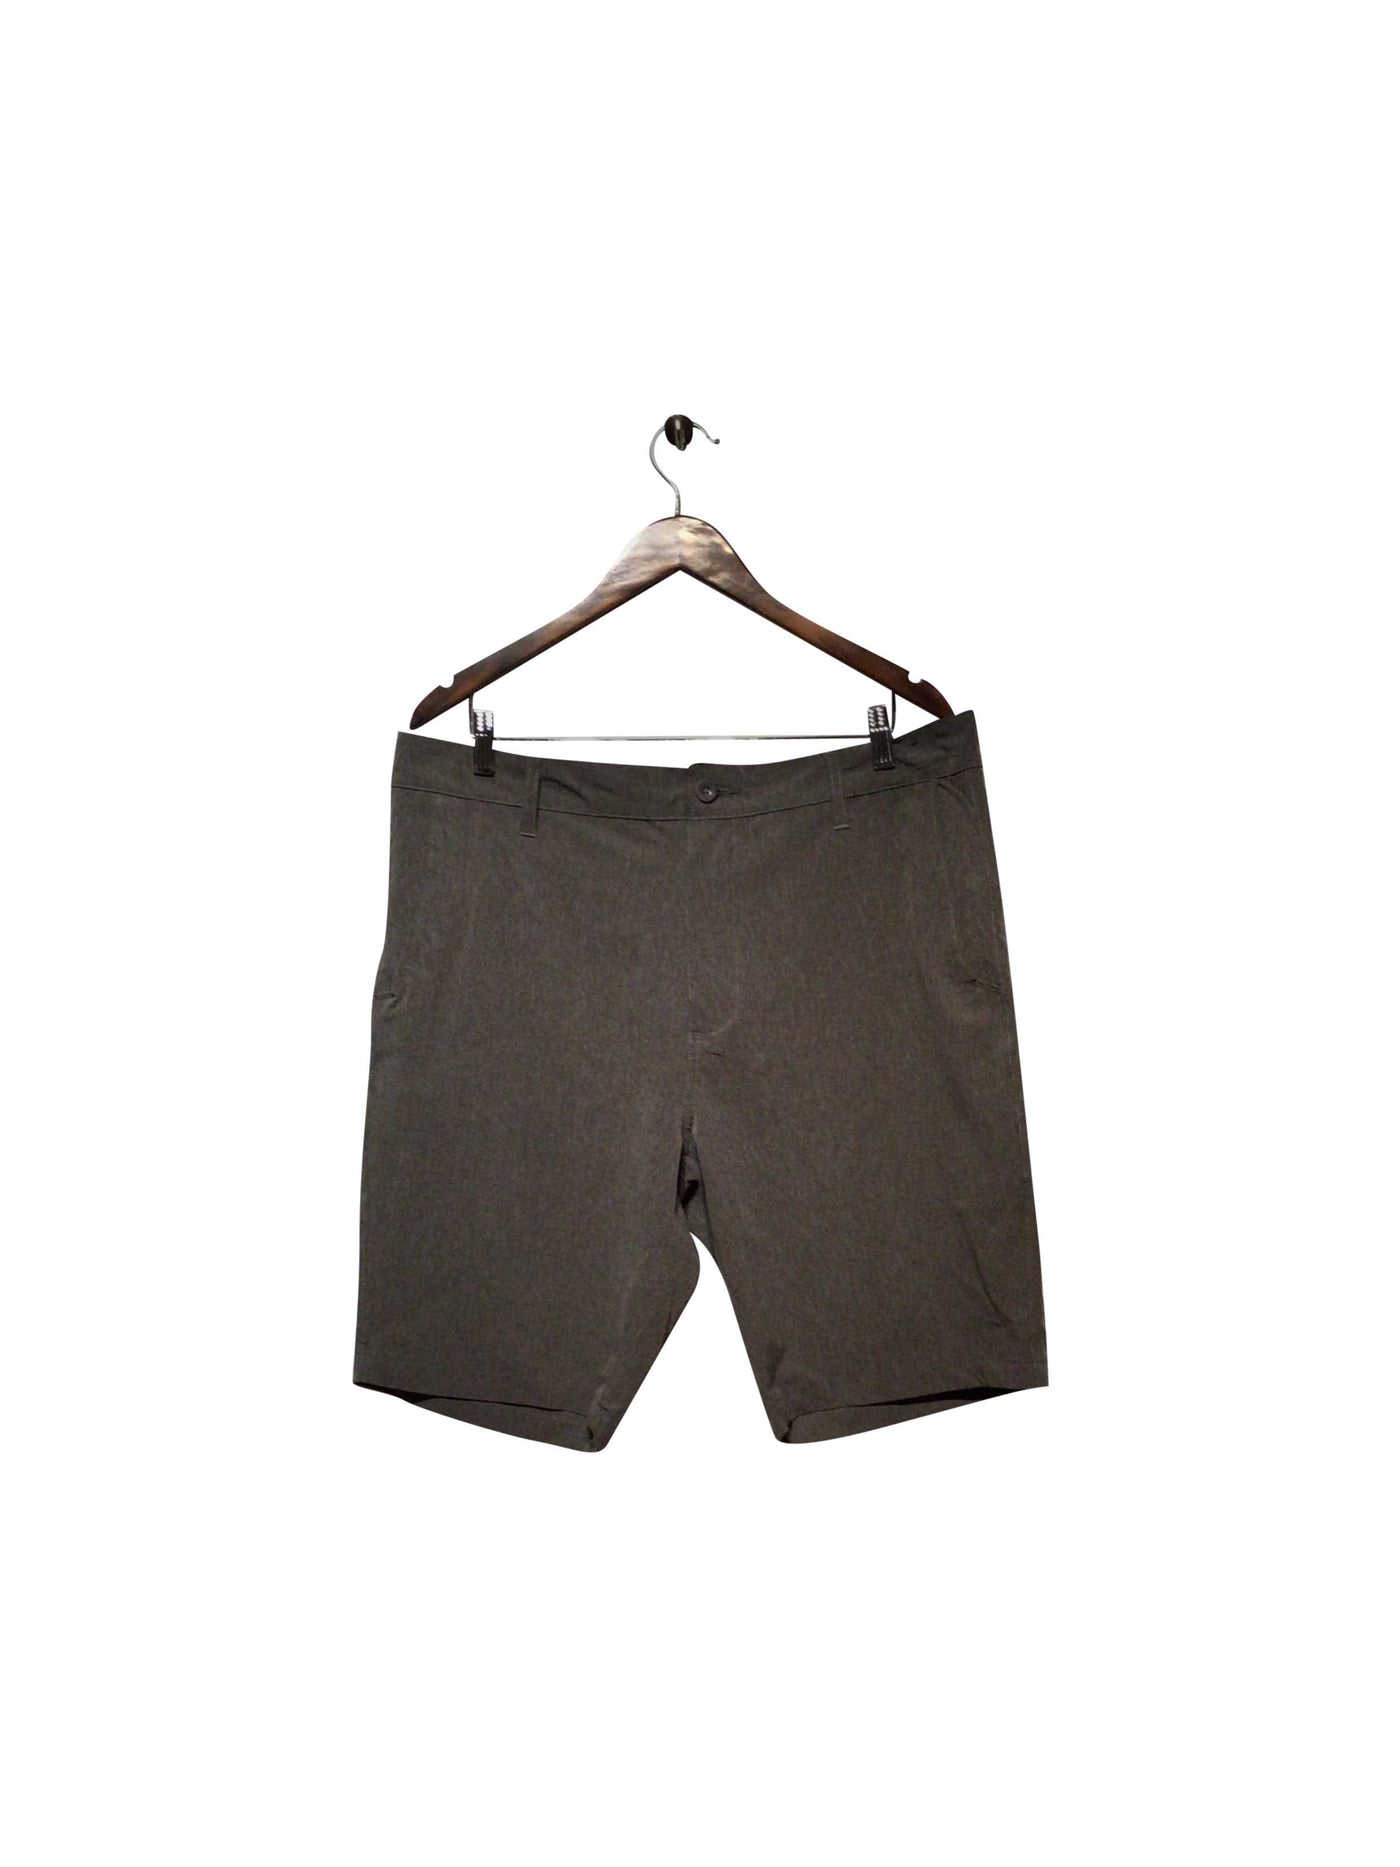 SPLIT Regular fit Pant Shorts in Gray  -  36  8.99 Koop